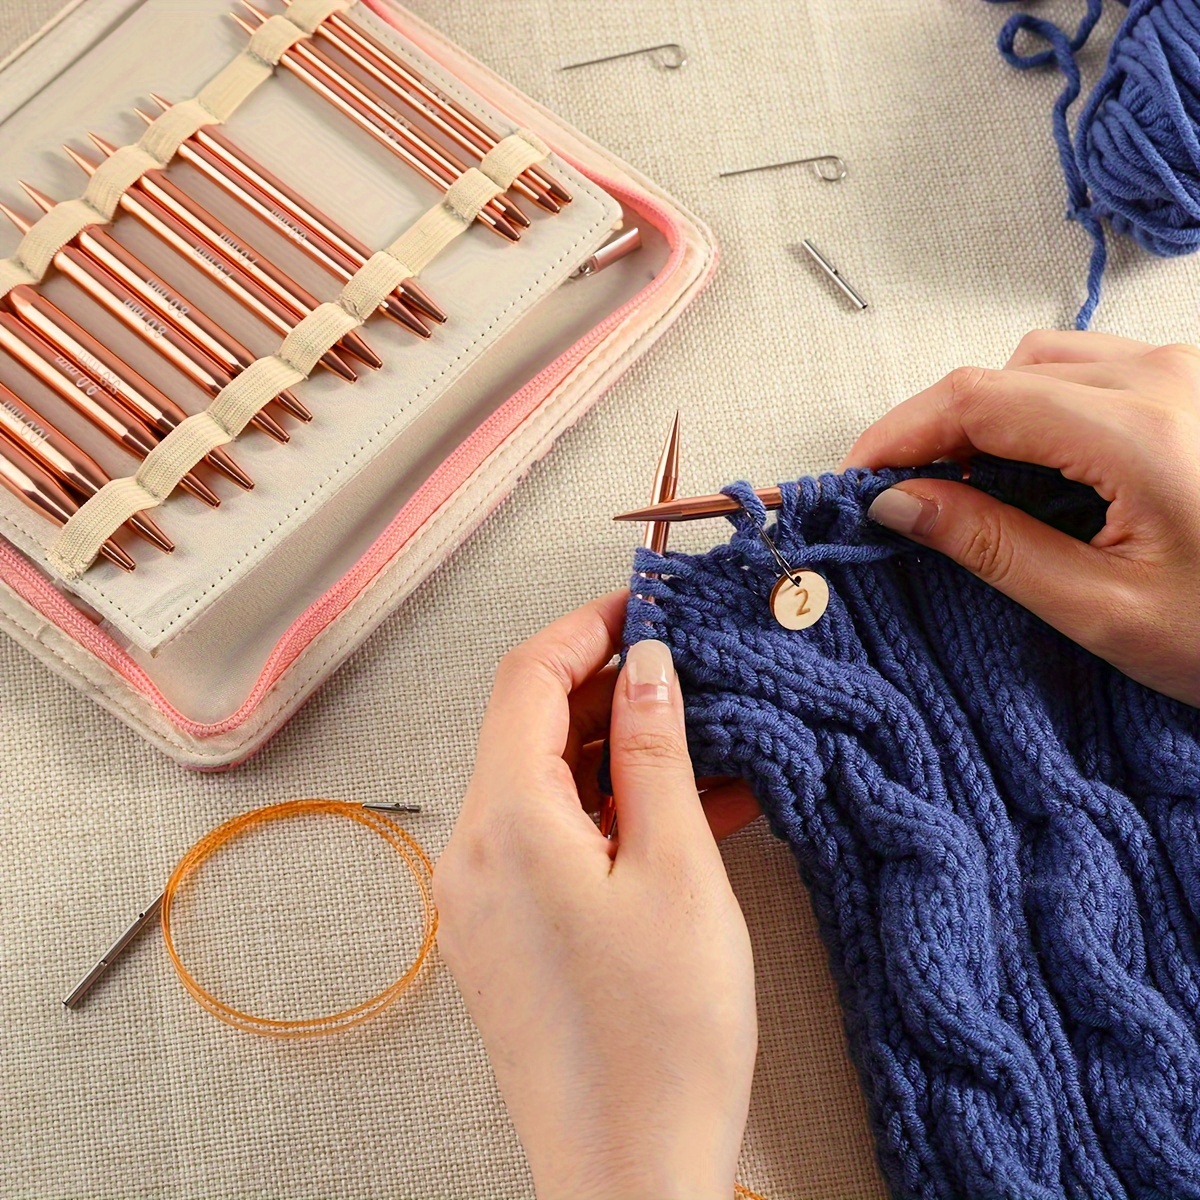 Aluminum Oxide Crochet Knitting Tools Colorful Single Crochet